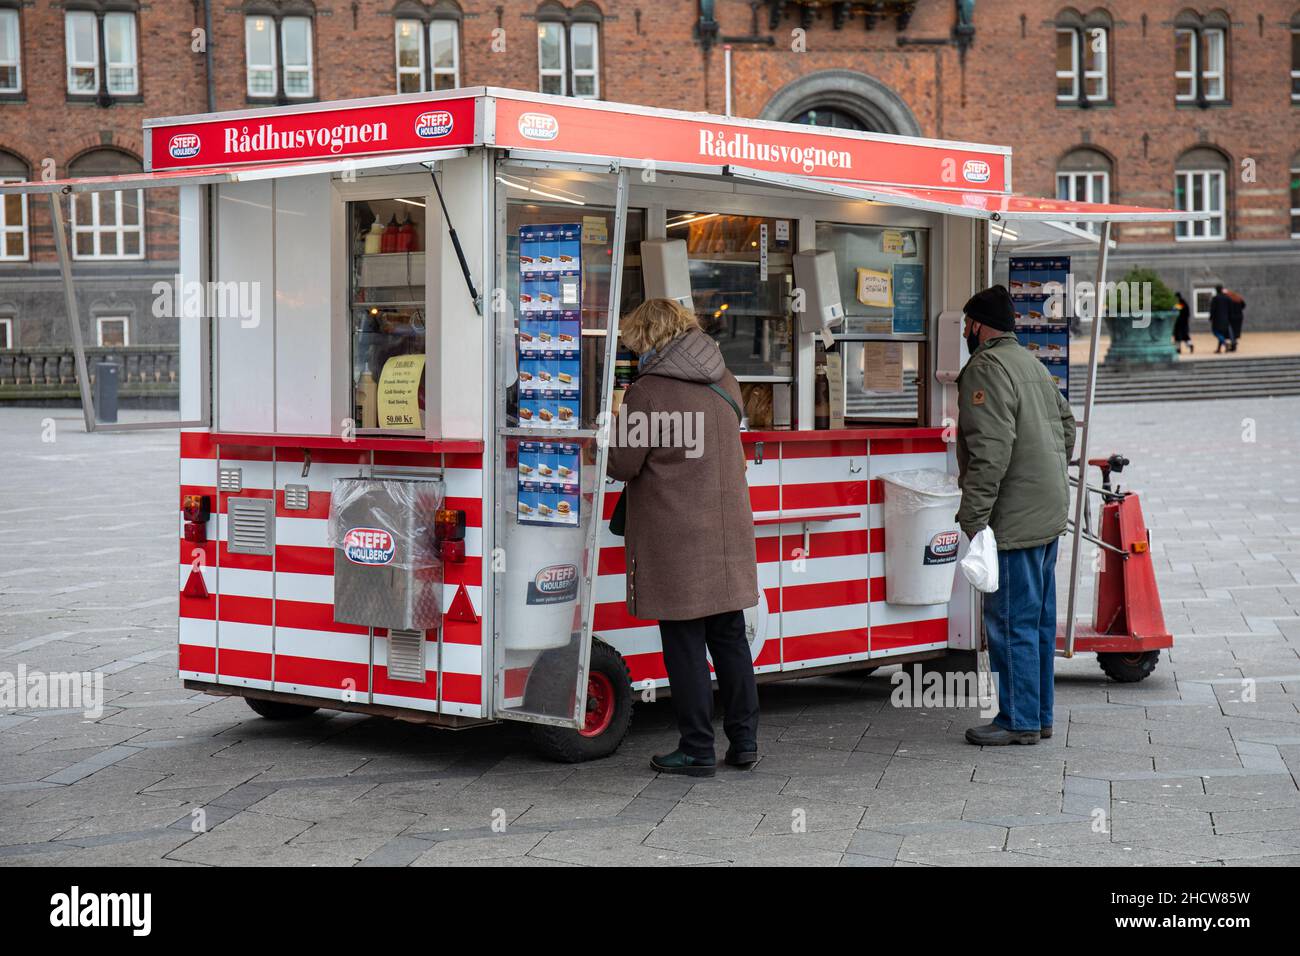 People buying fast food from Rådhusvognen hot dog stand or van on  Rådhuspladsen in Copenhagen, Denmark Stock Photo - Alamy